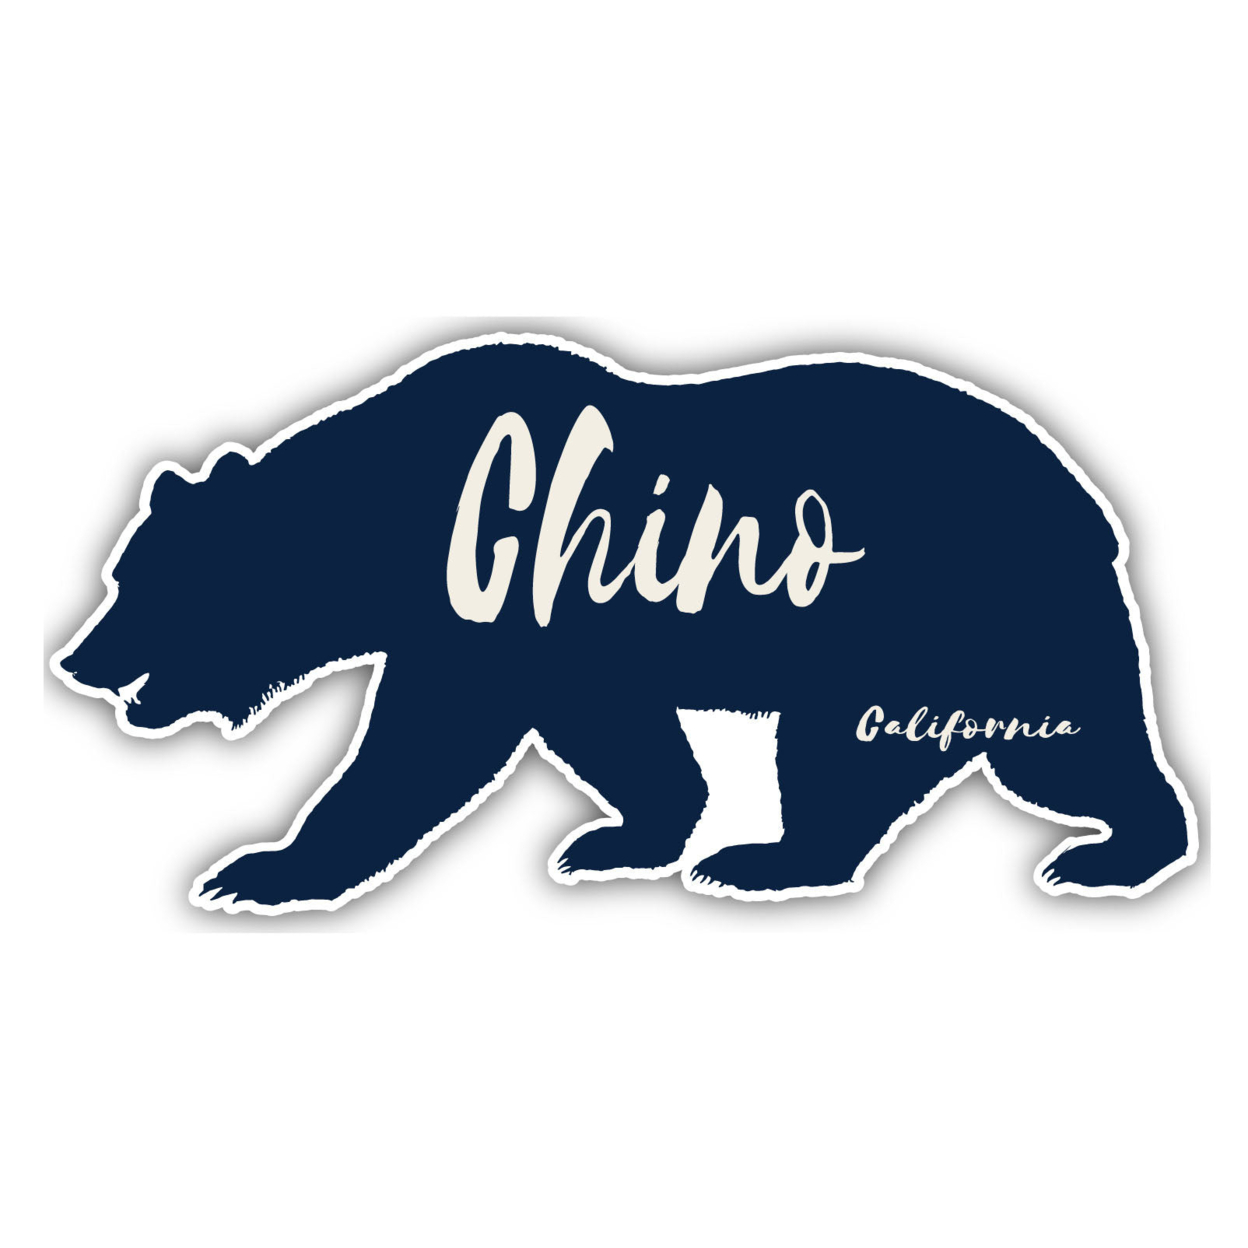 Chino California Souvenir Decorative Stickers (Choose Theme And Size) - Single Unit, 10-Inch, Bear